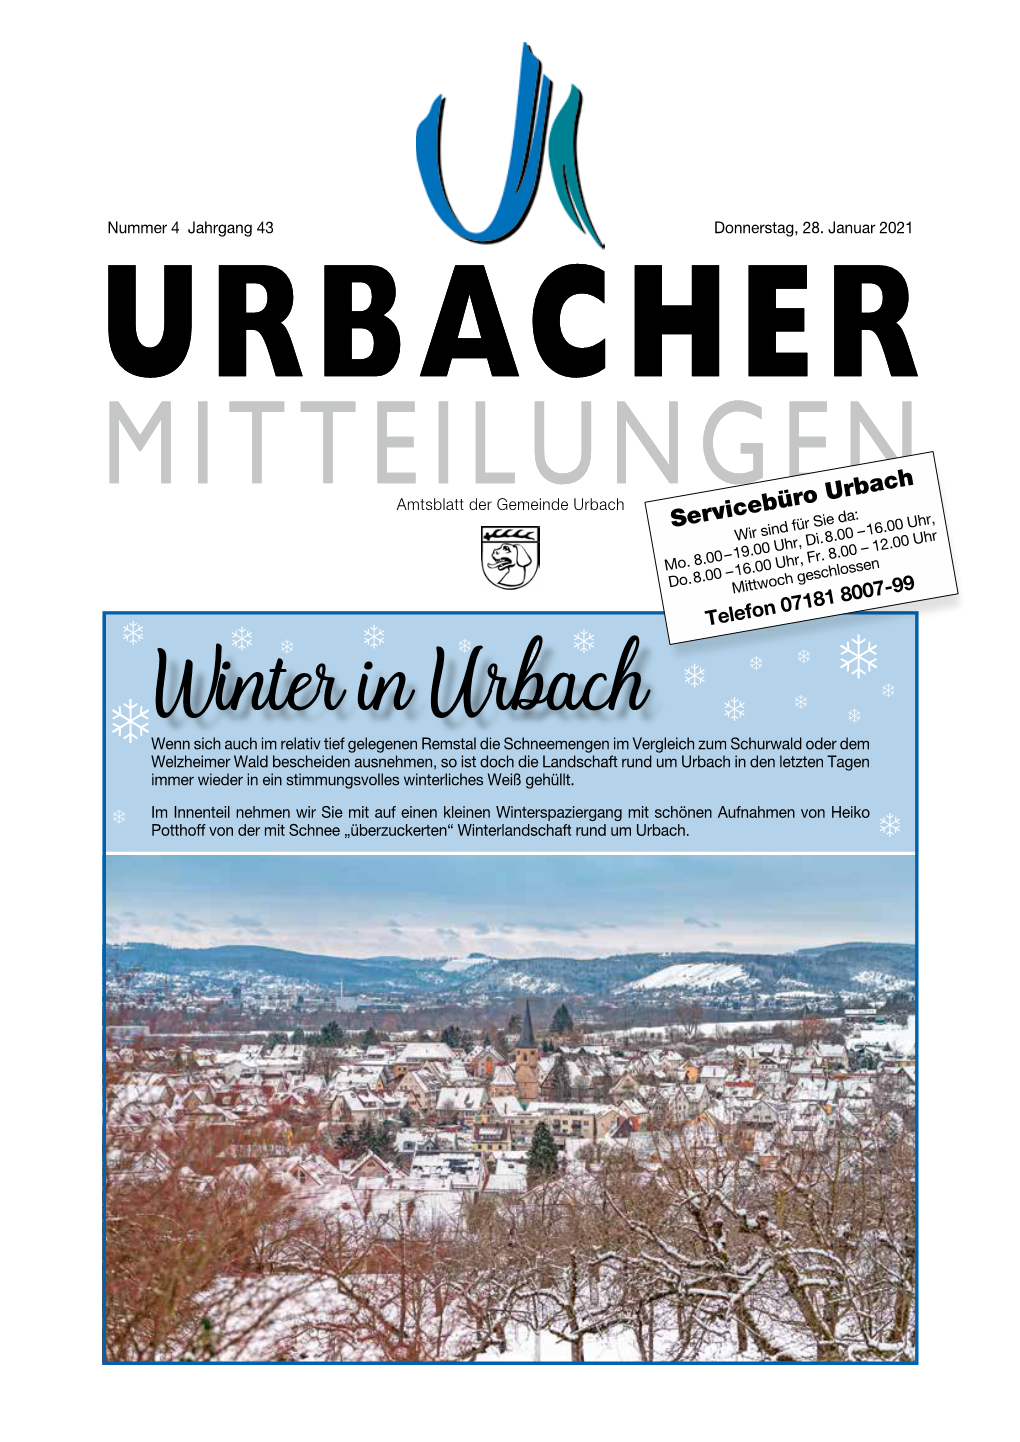 Dwinter in Urbach